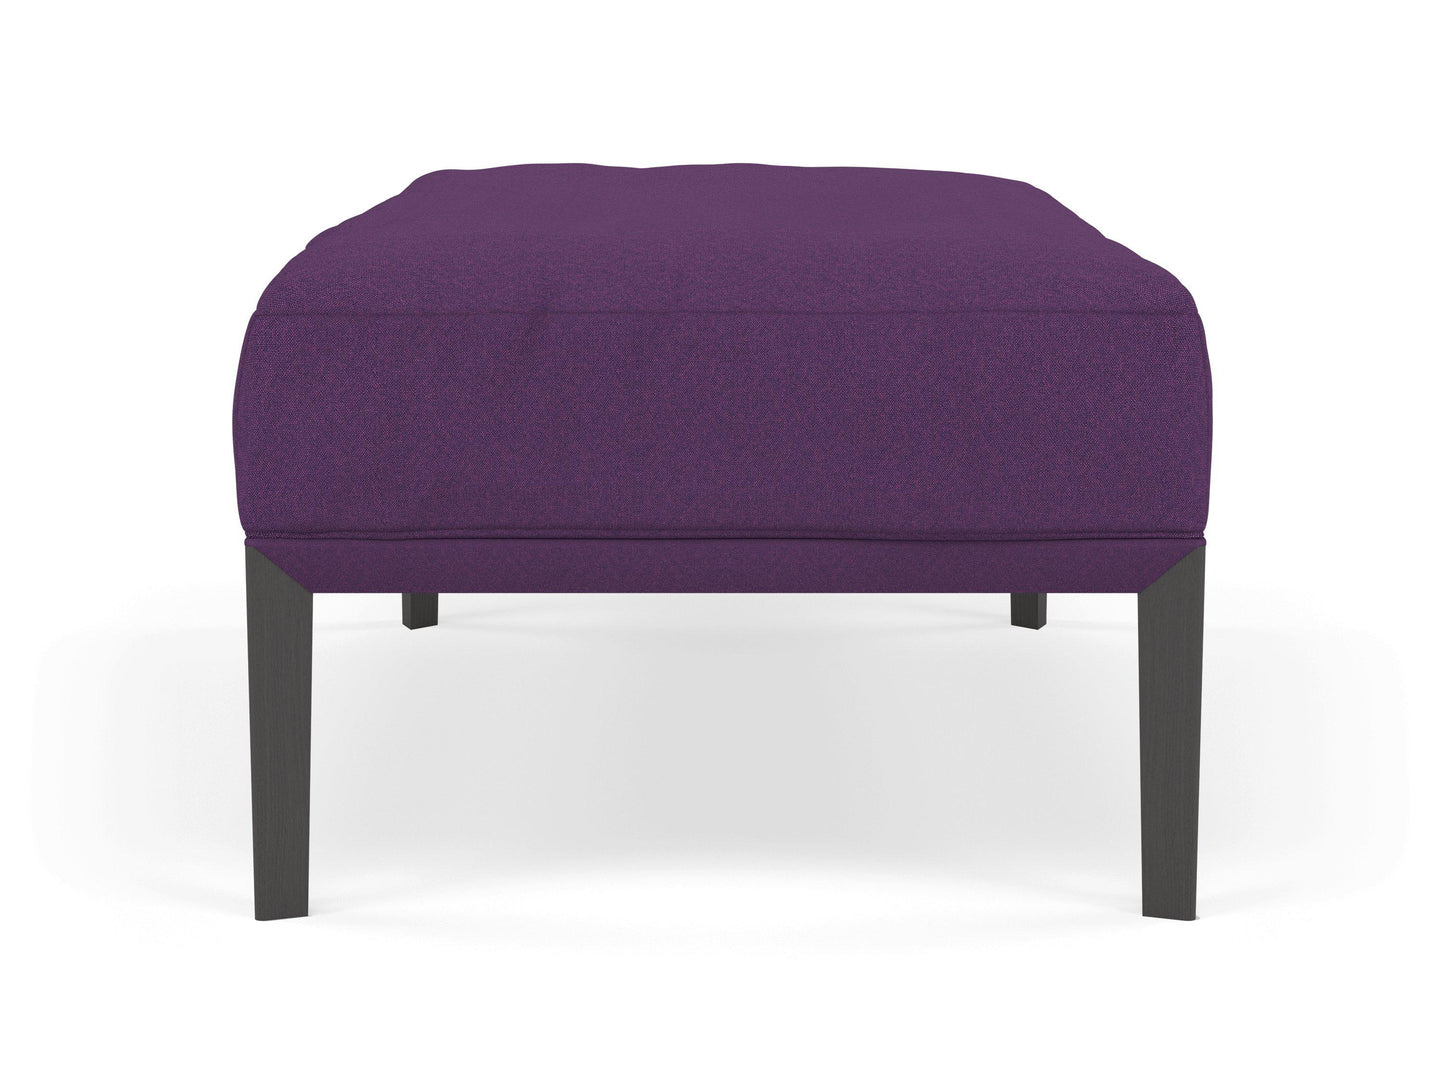 Modern Pouffe Footstool Ottoman Rectangular Seat 103x65cm in Deep Purple Fabric-Distinct Designs (London) Ltd